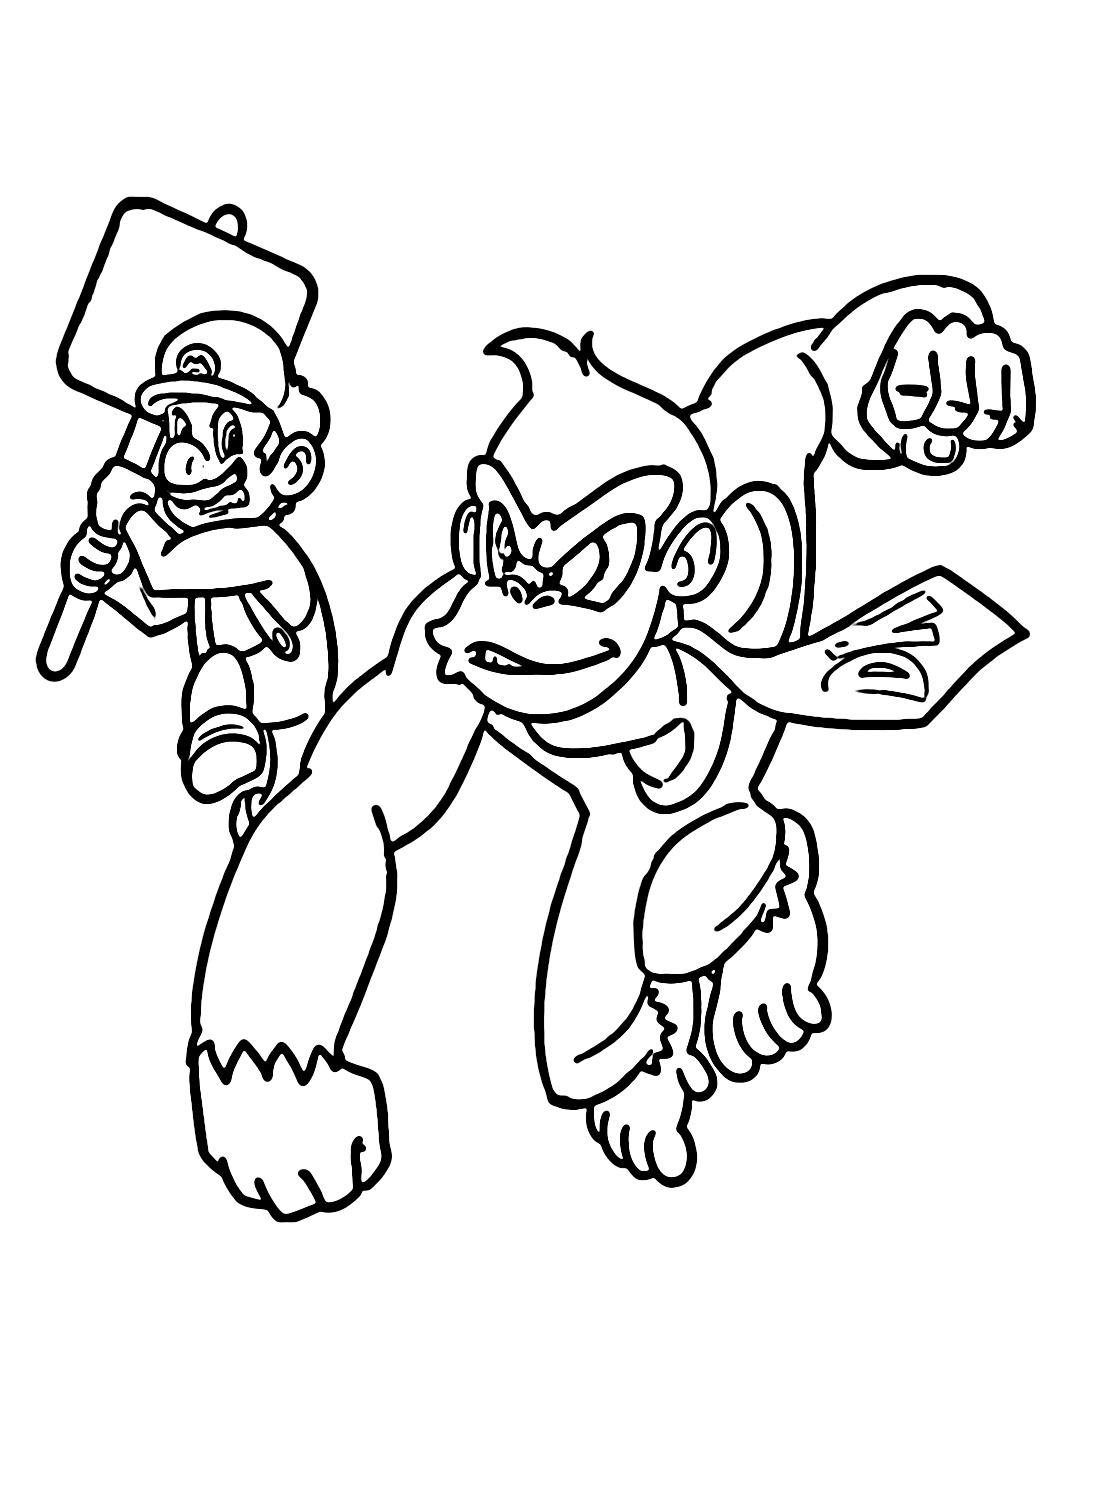 Mario contre Donkey Kong de Donkey Kong